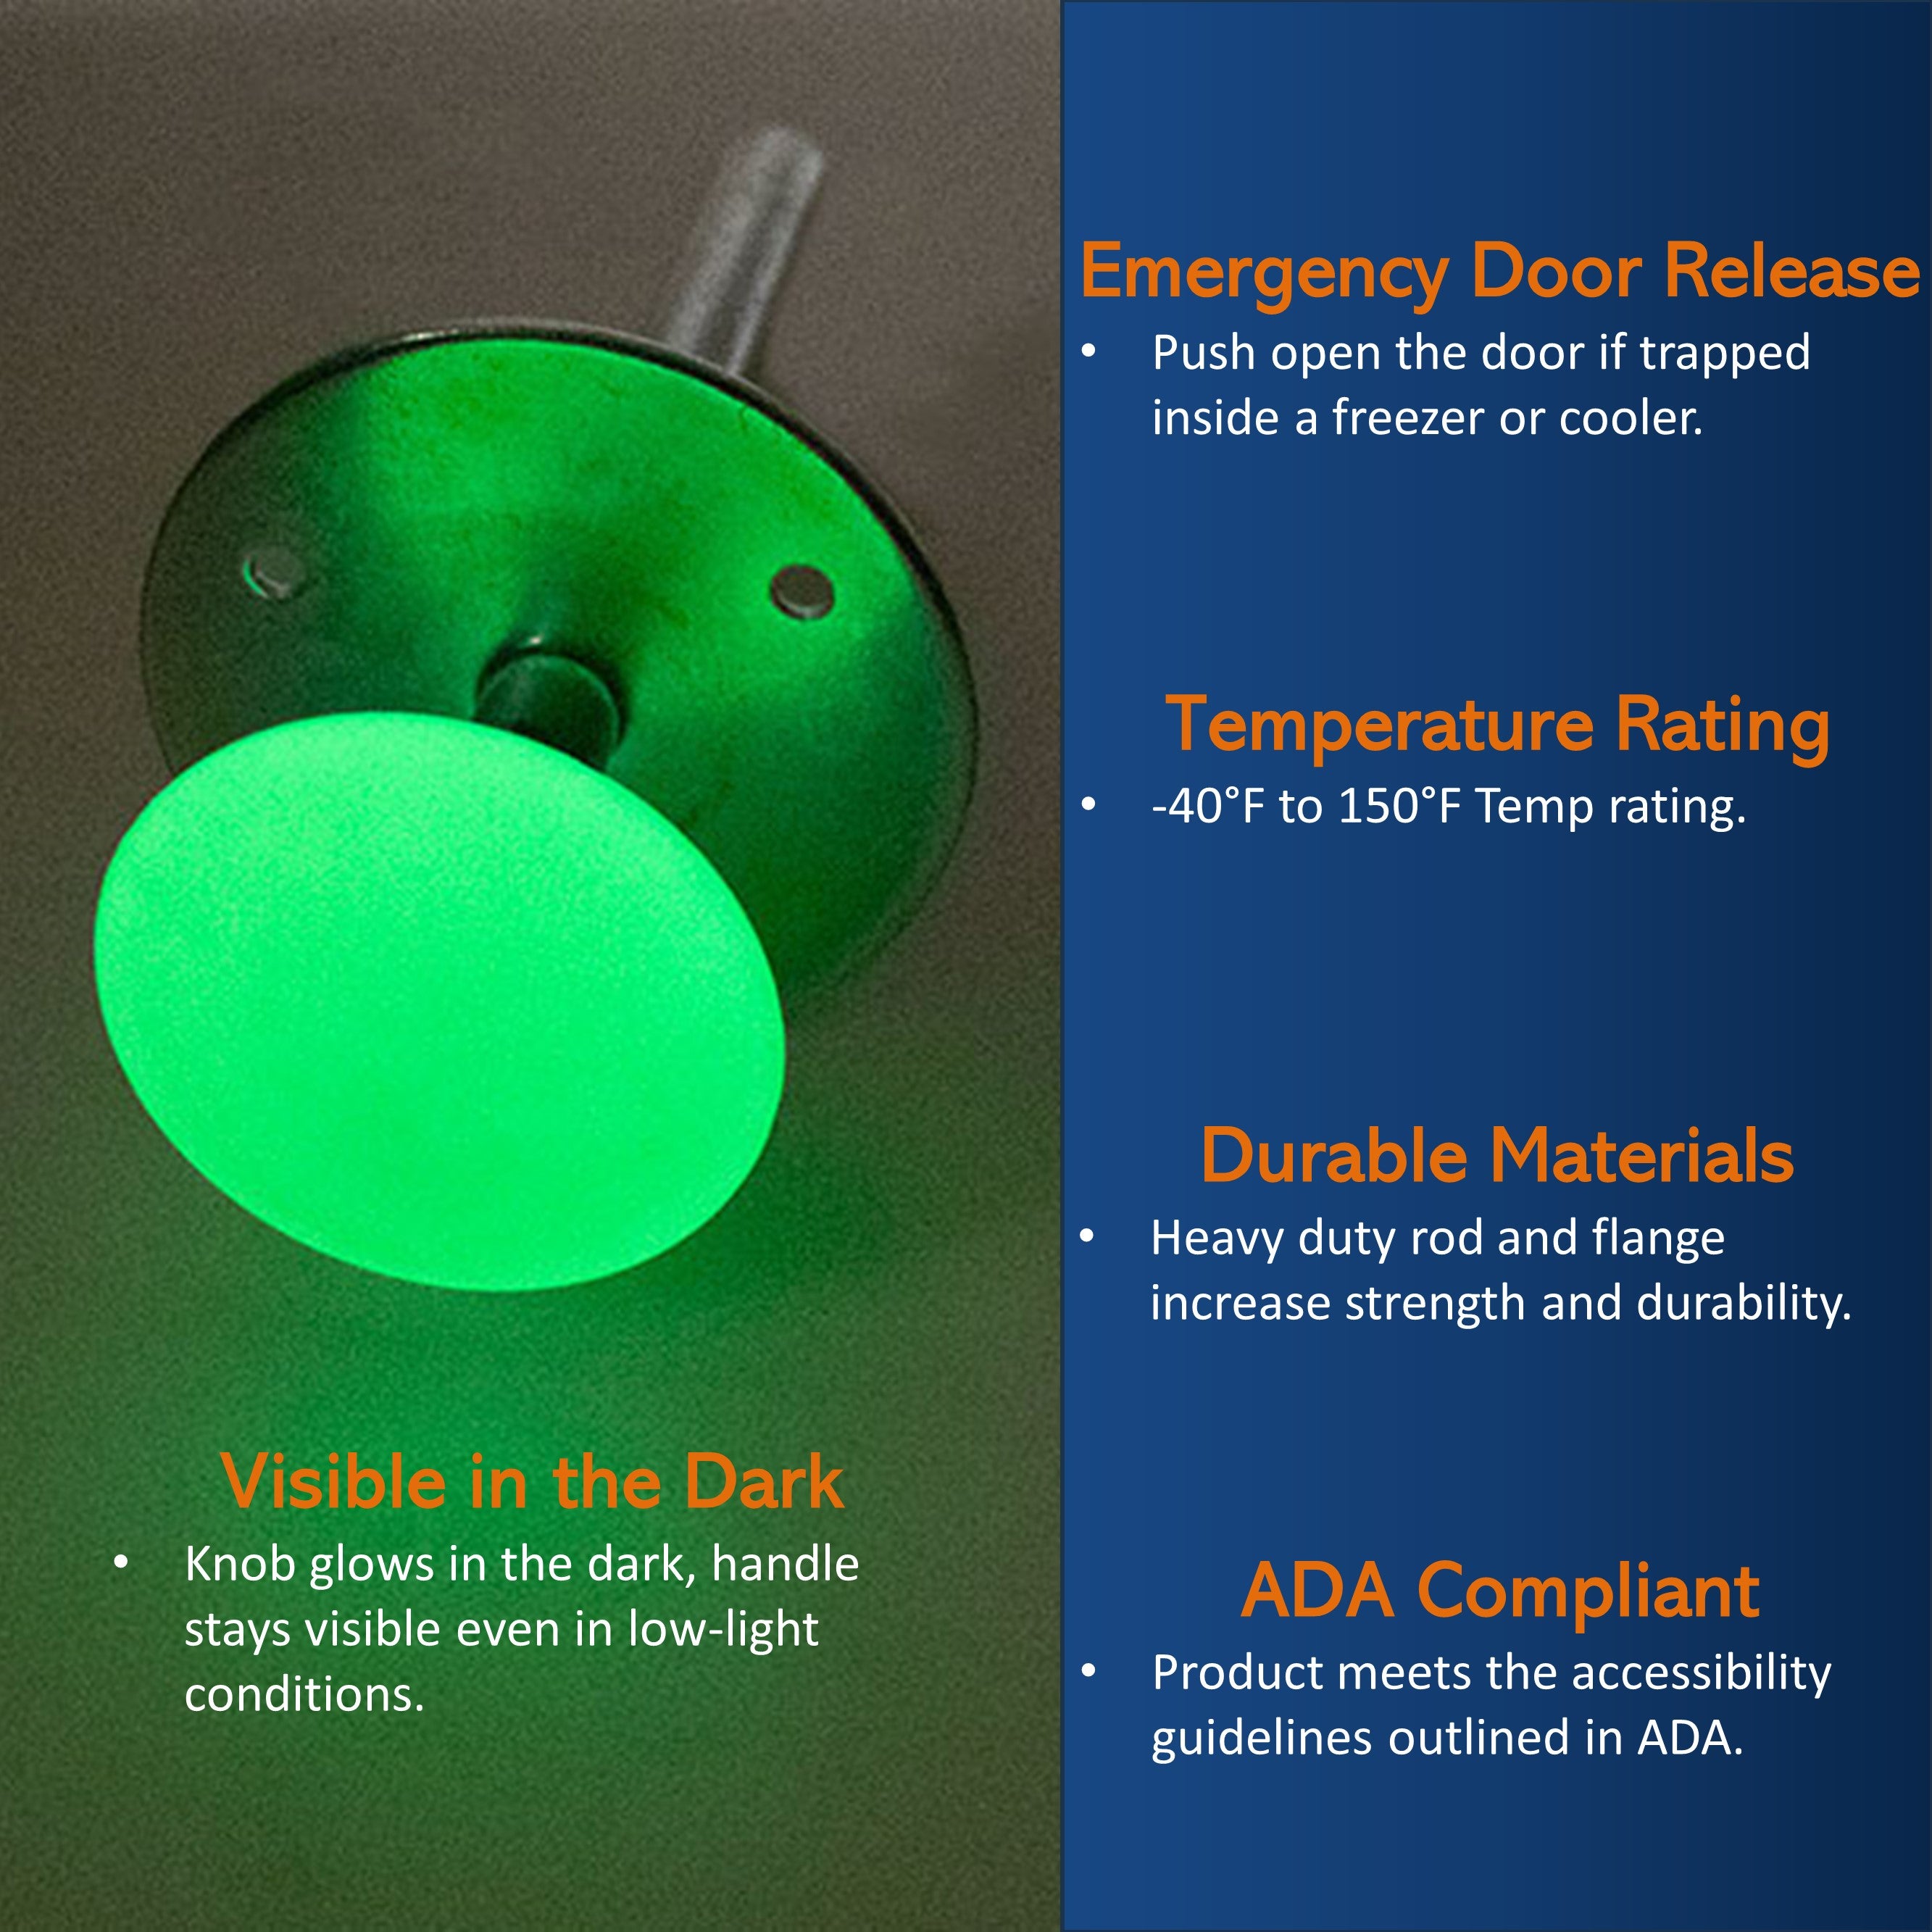 Kason 481-A Inside Release Handle, Glow in Dark, Push Rod for Door of Walk-in Coolers and Freezers